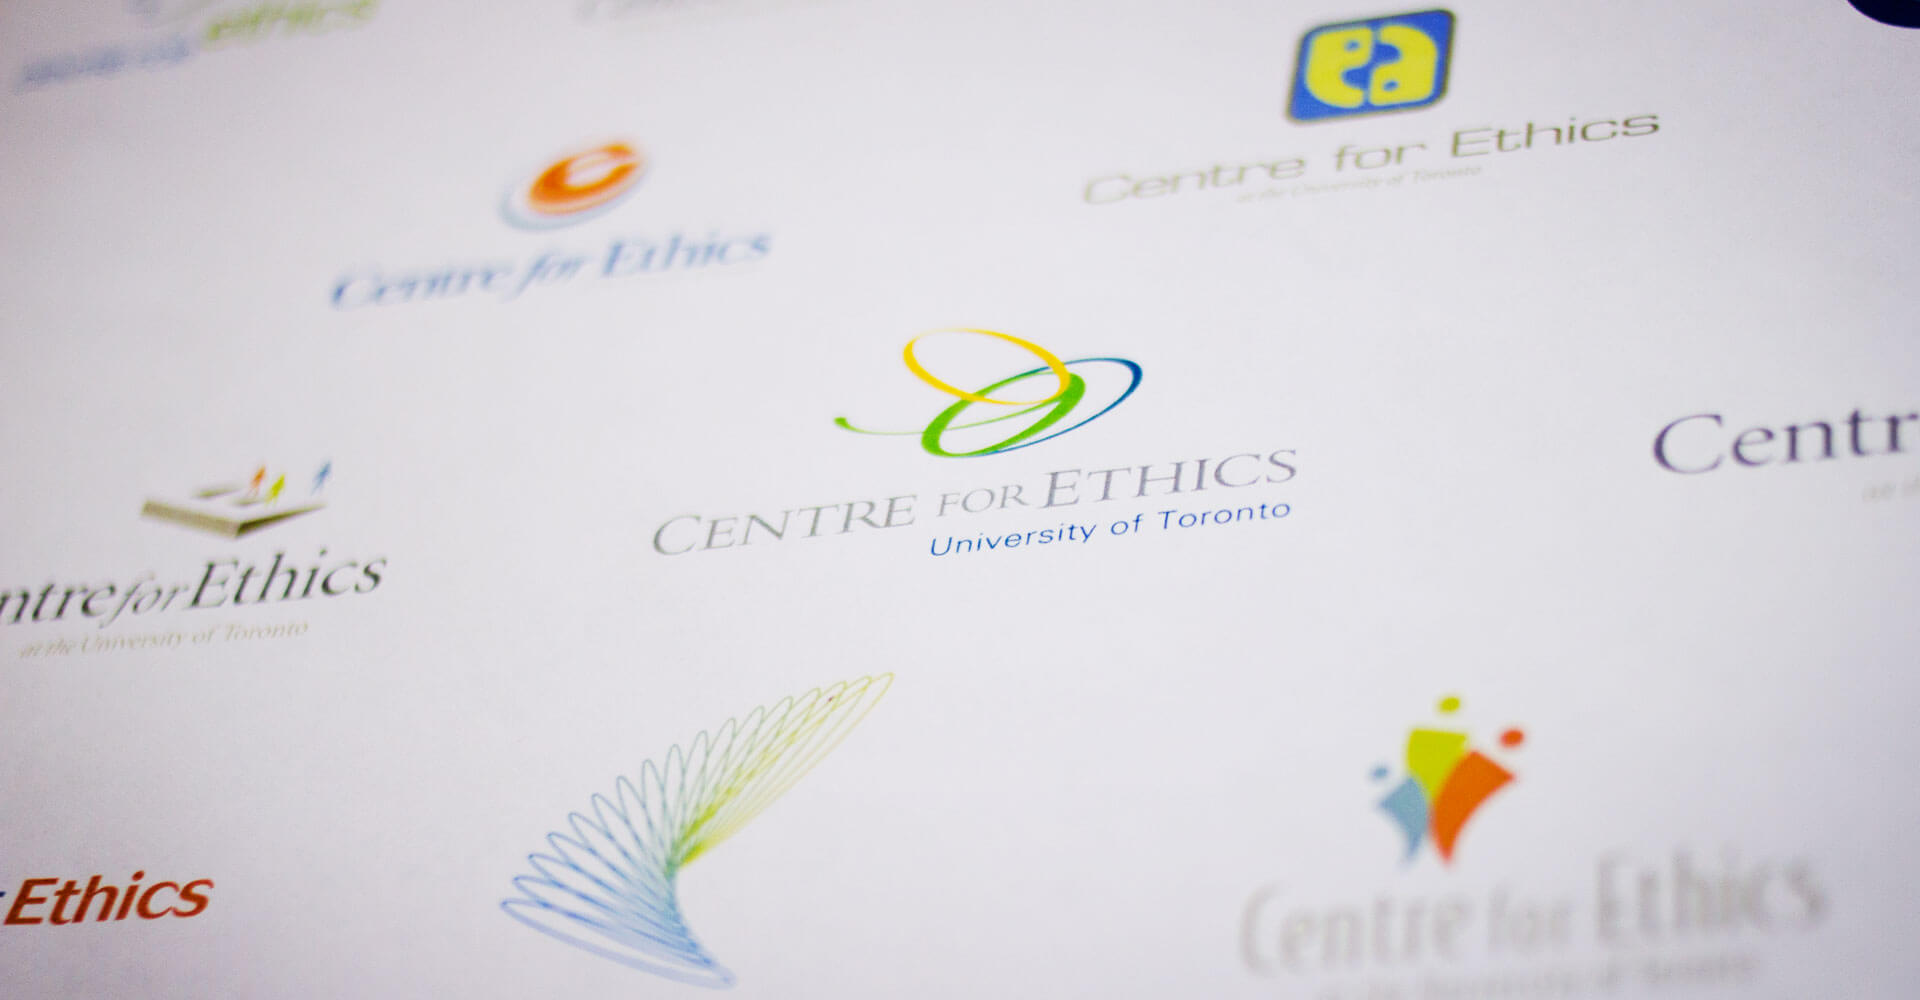 University of Toronto - Centre for Ethics